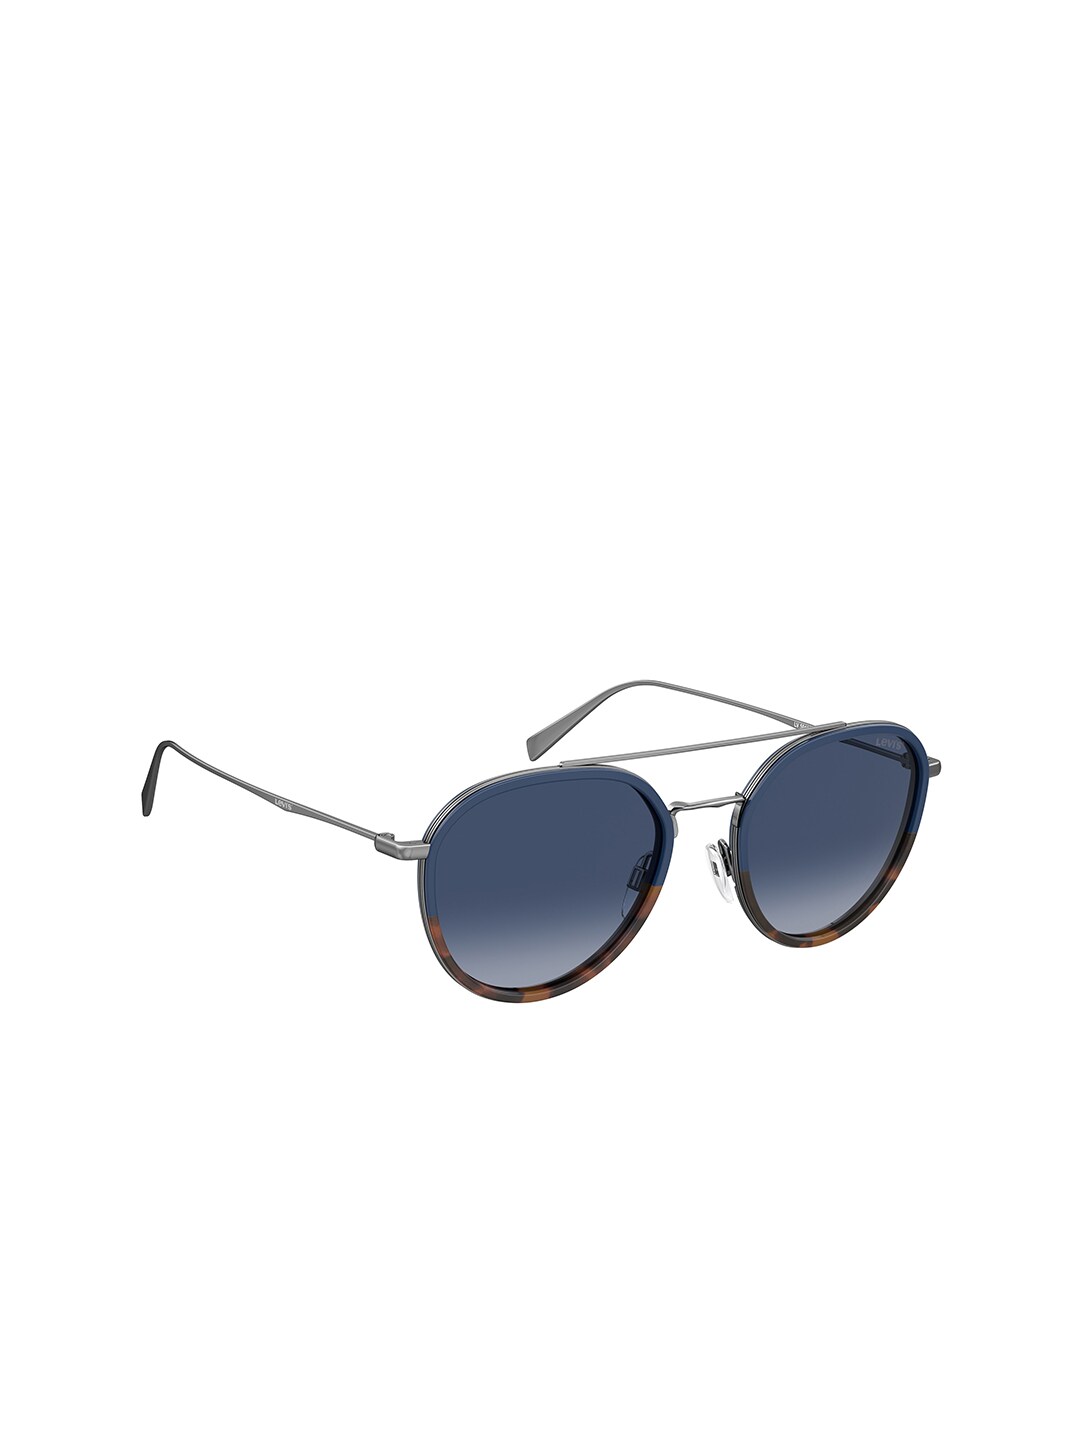 Levis Unisex Grey Lens & Blue Round UV Protected Lens Sunglasses